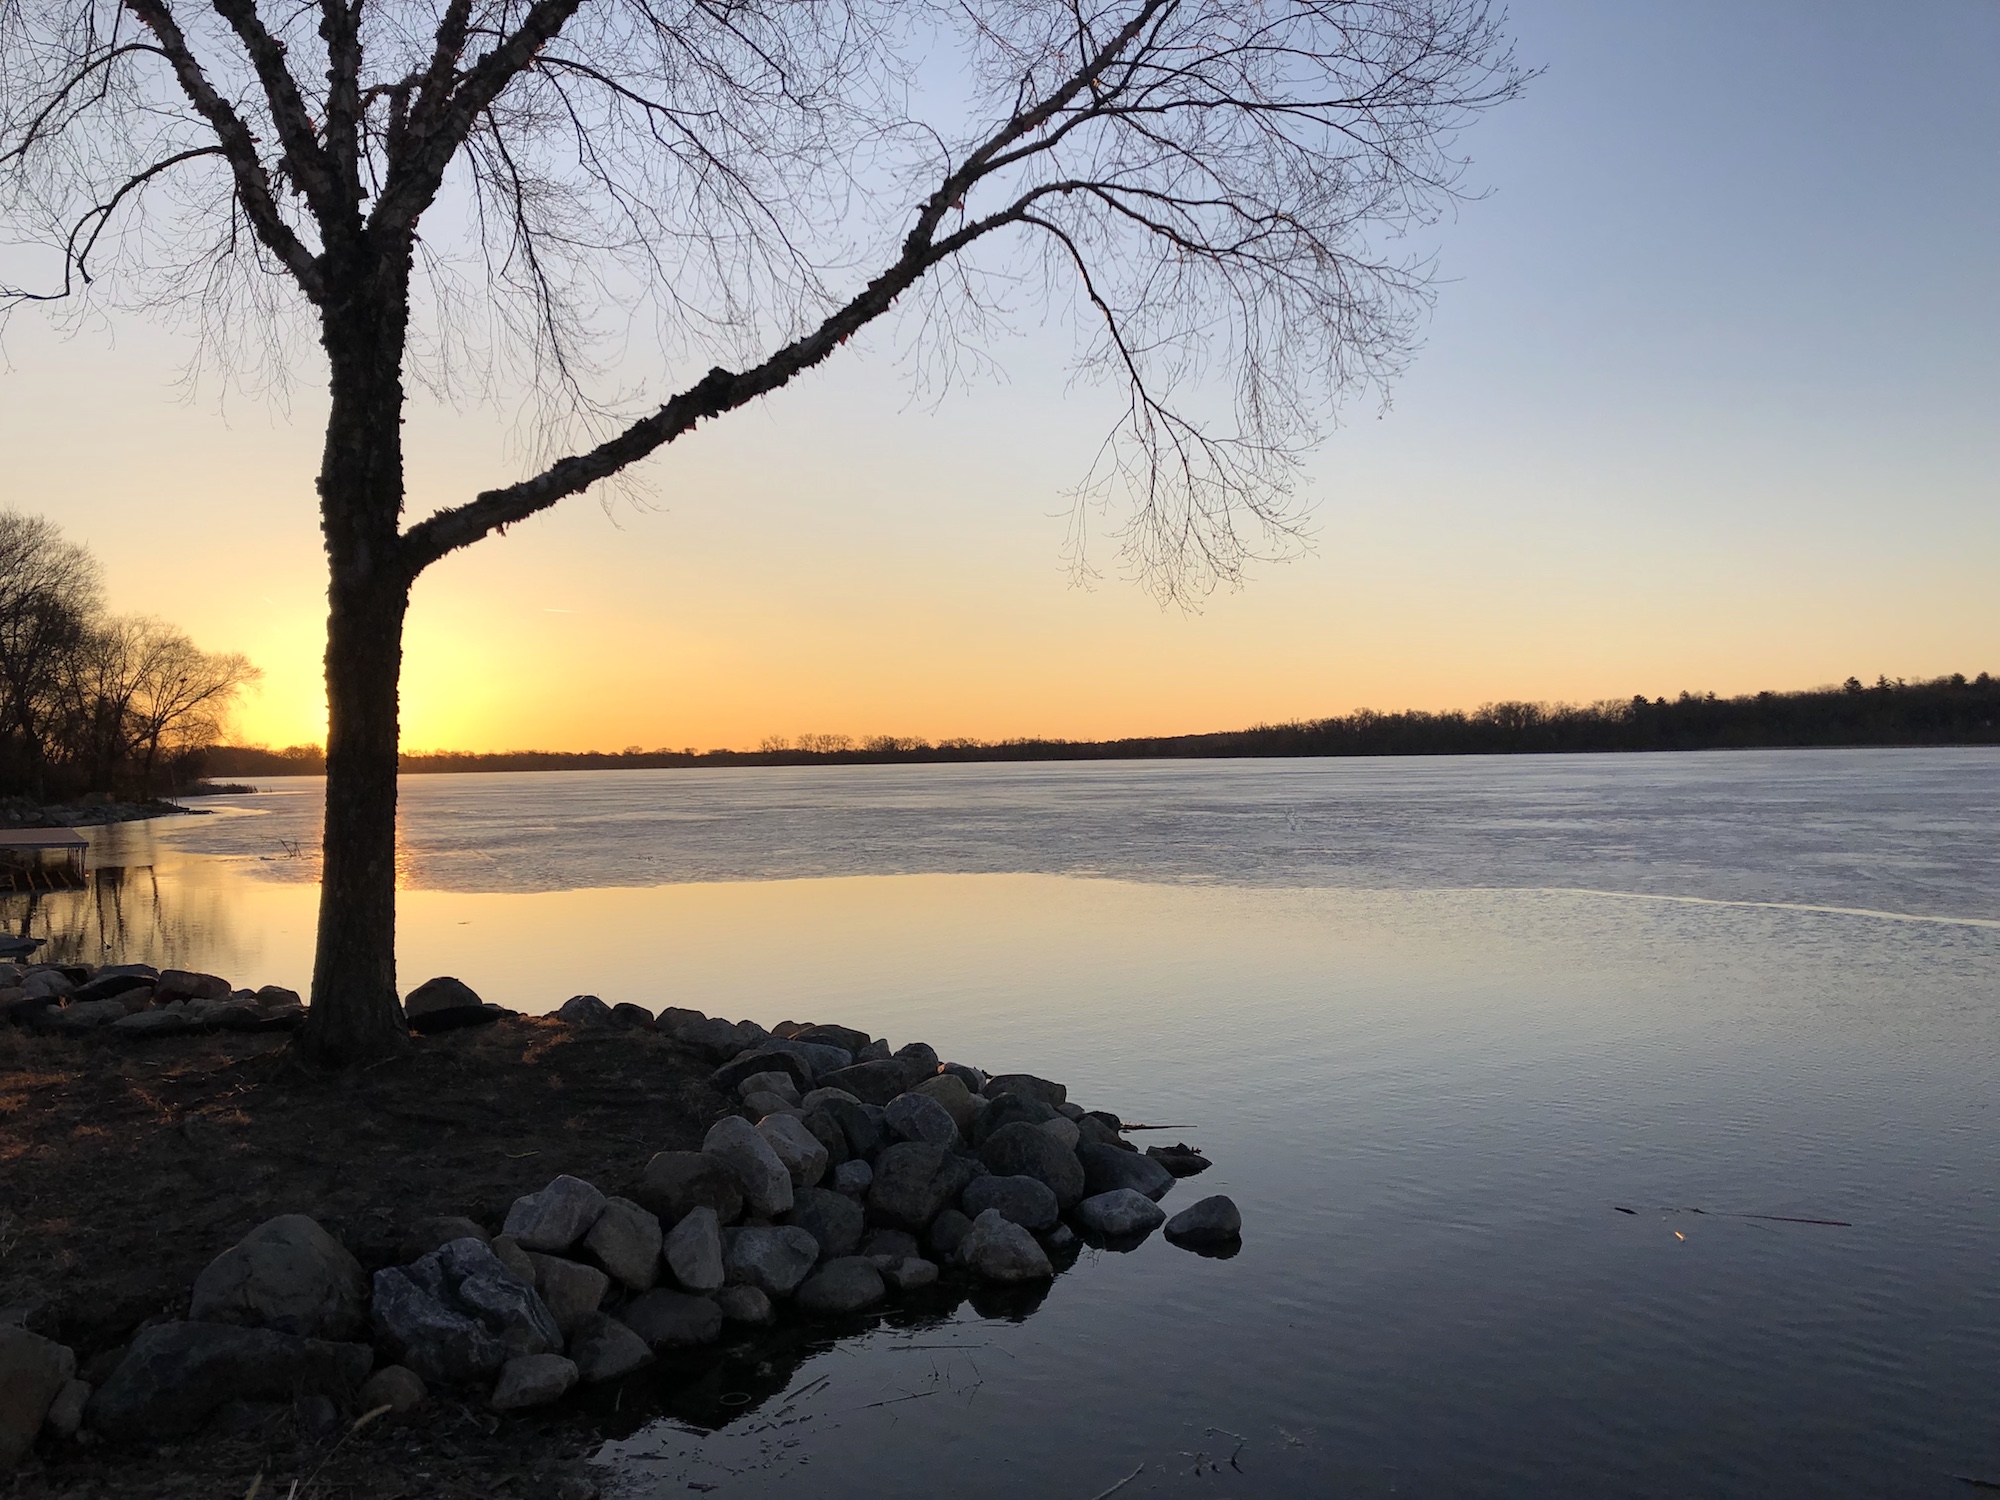 Lake Wingra on March 25, 2019.